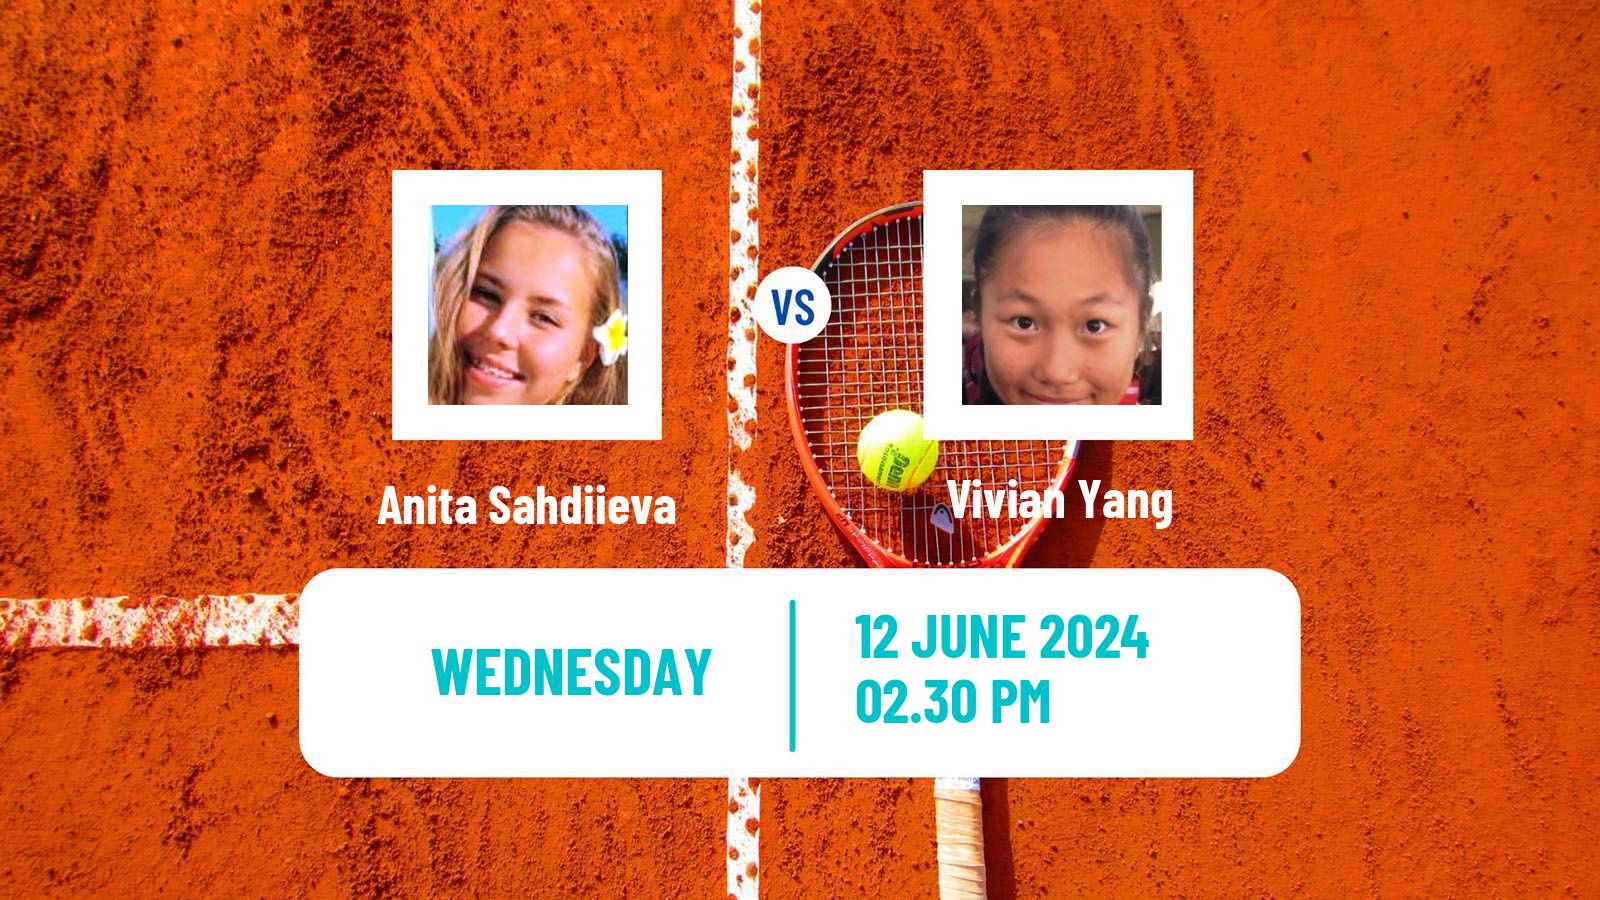 Tennis ITF W15 San Diego Ca 3 Women Anita Sahdiieva - Vivian Yang